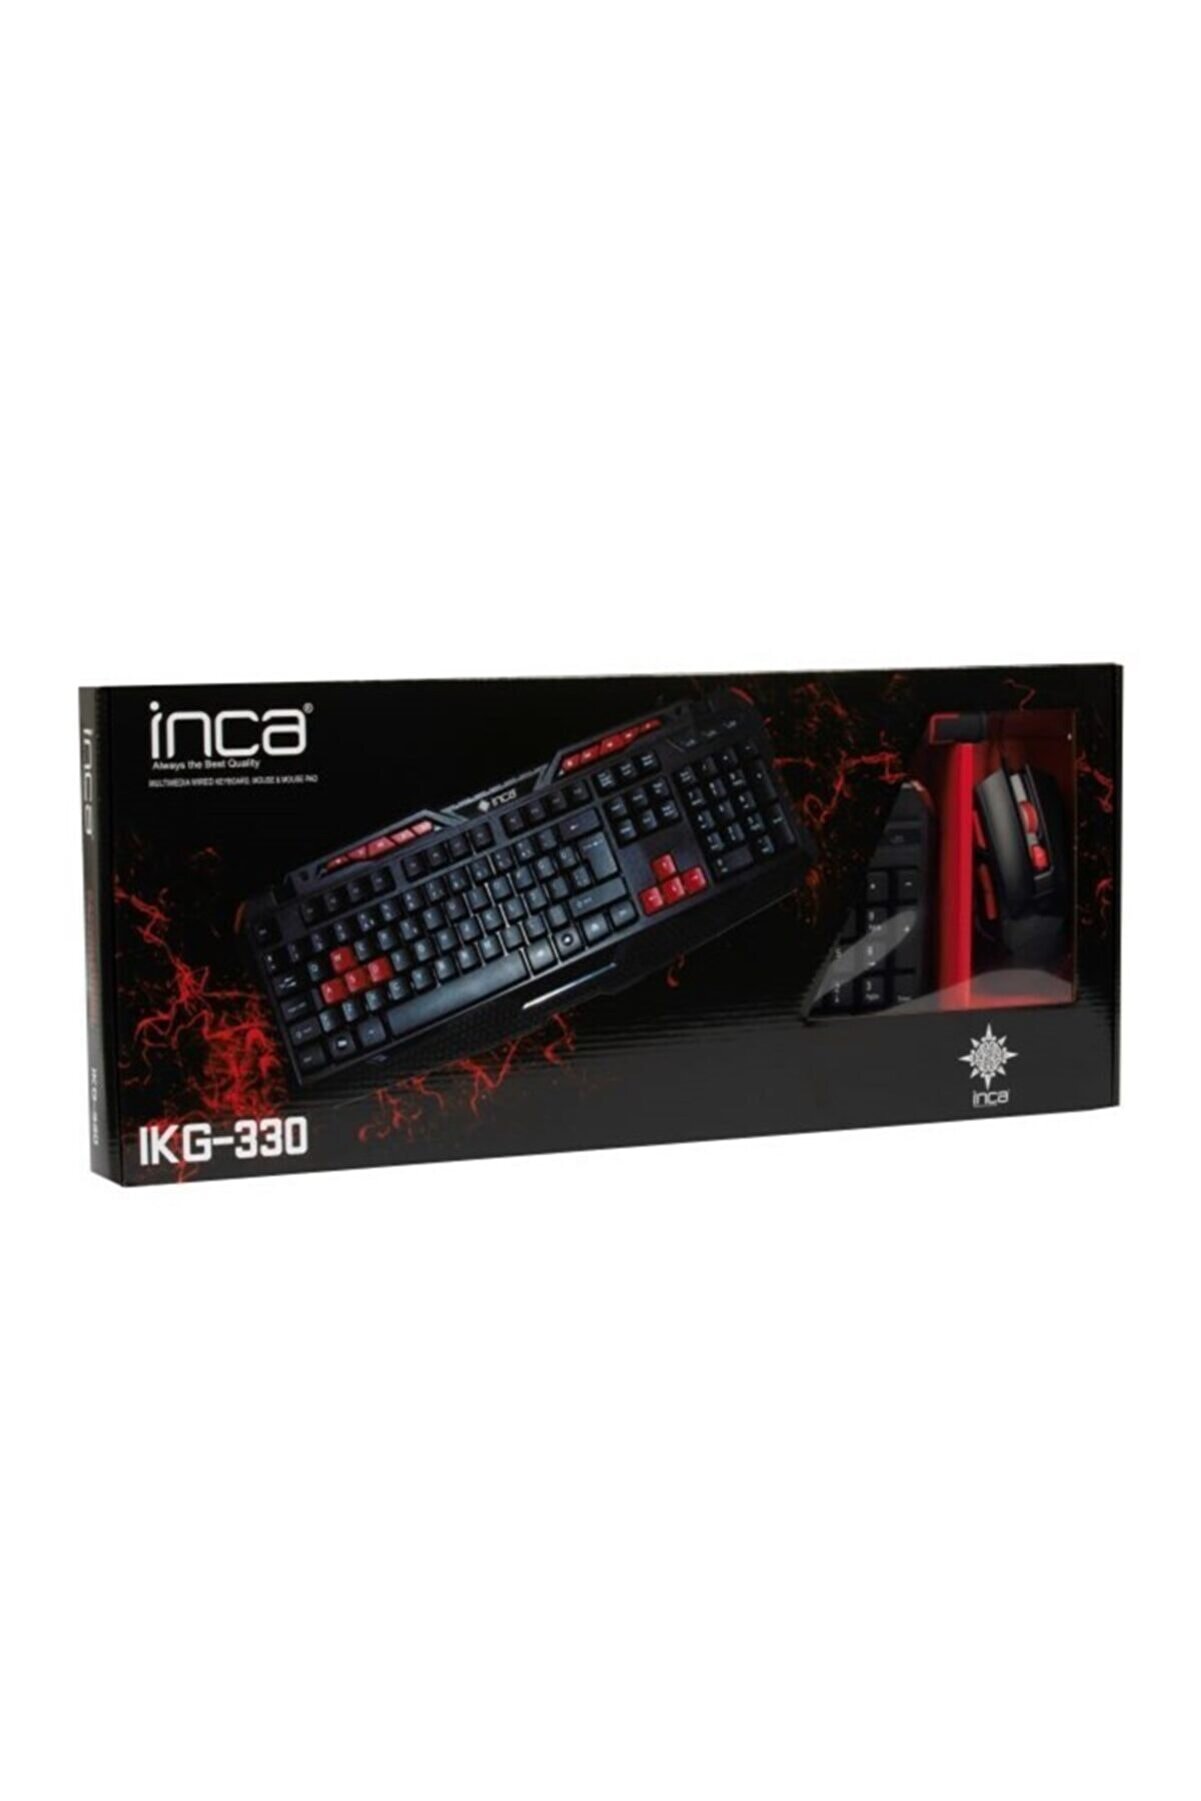 Inca Ikg-330 Gamıng Oyuncu Klavye+mouse+mouse Pad Seti